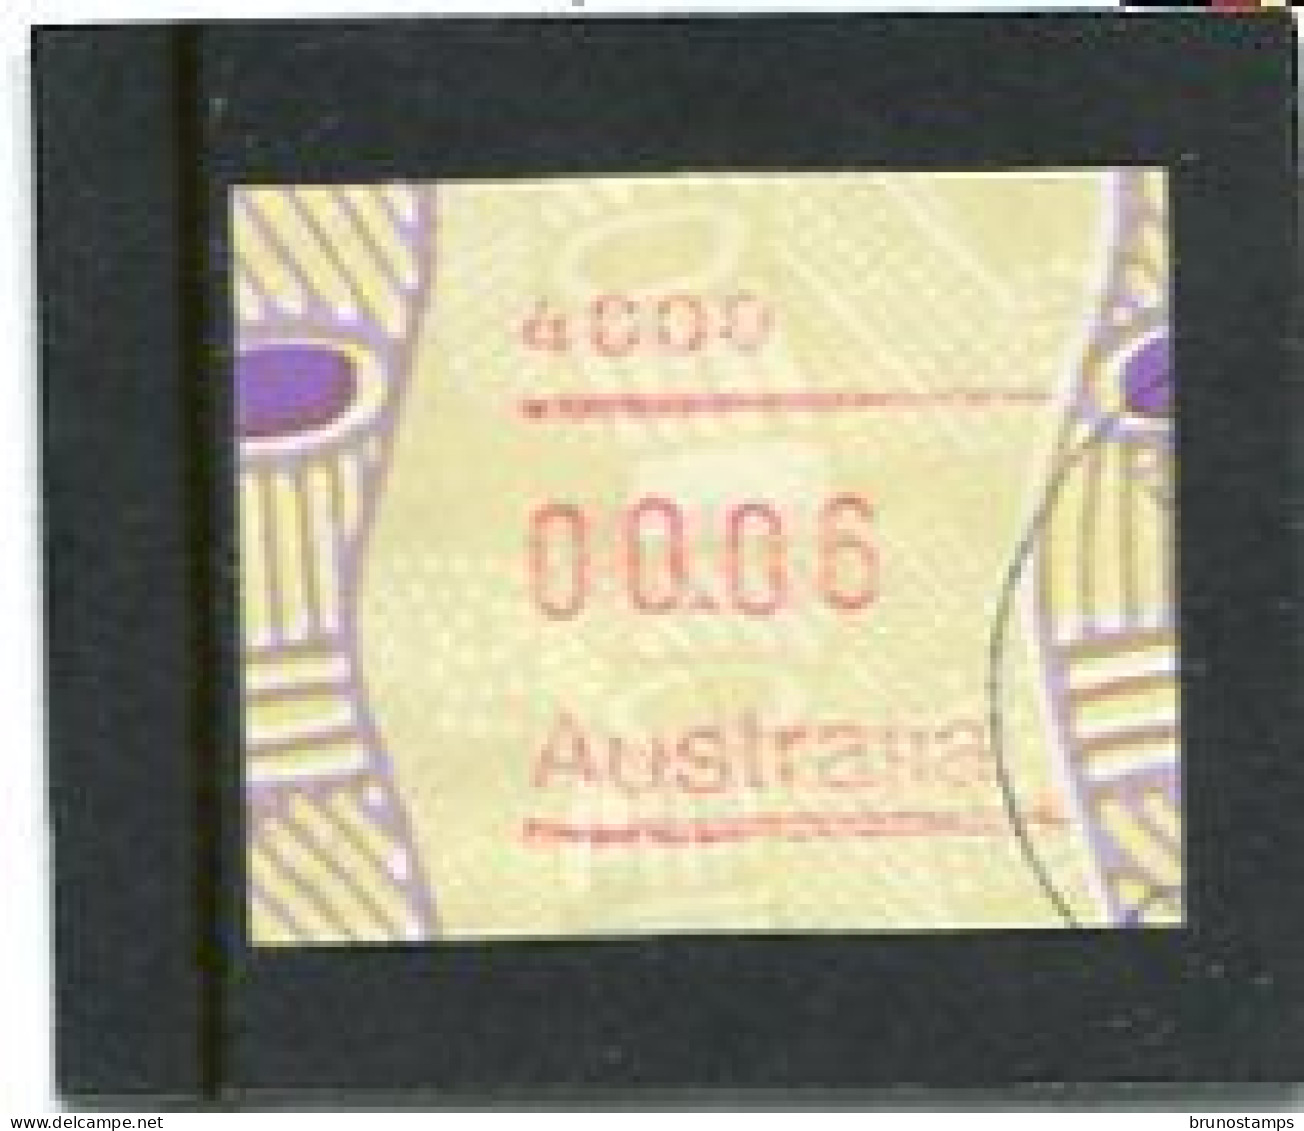 AUSTRALIA - 1999  6c  FRAMA  TIWI  POSTCODE 4000 (BRISBANE)   FINE USED - Automatenmarken [ATM]